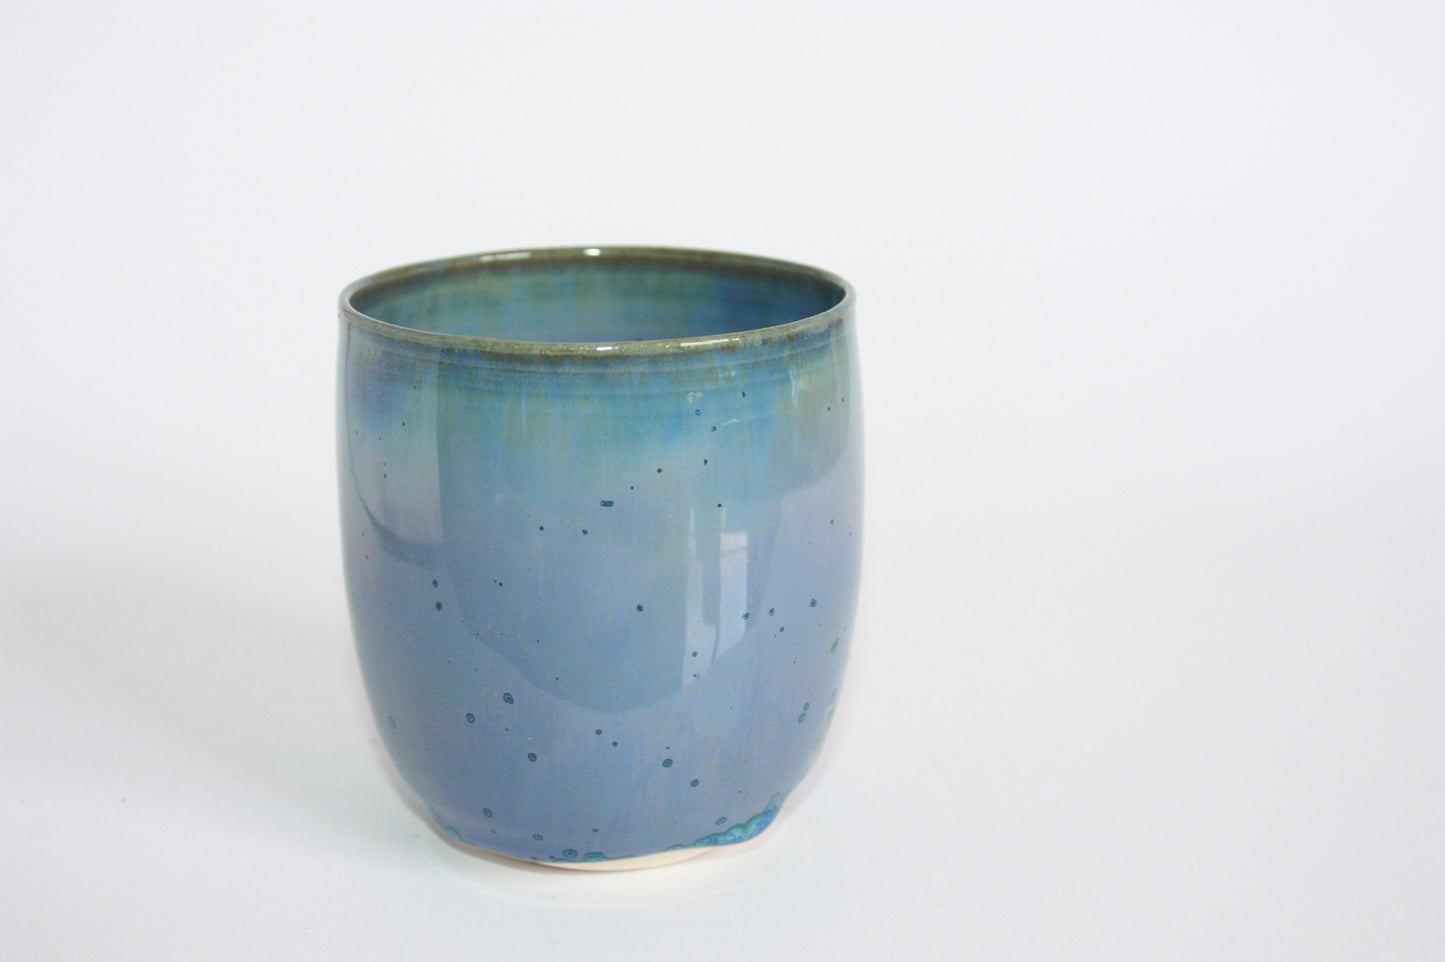 Medium cup, Lagon Bleu